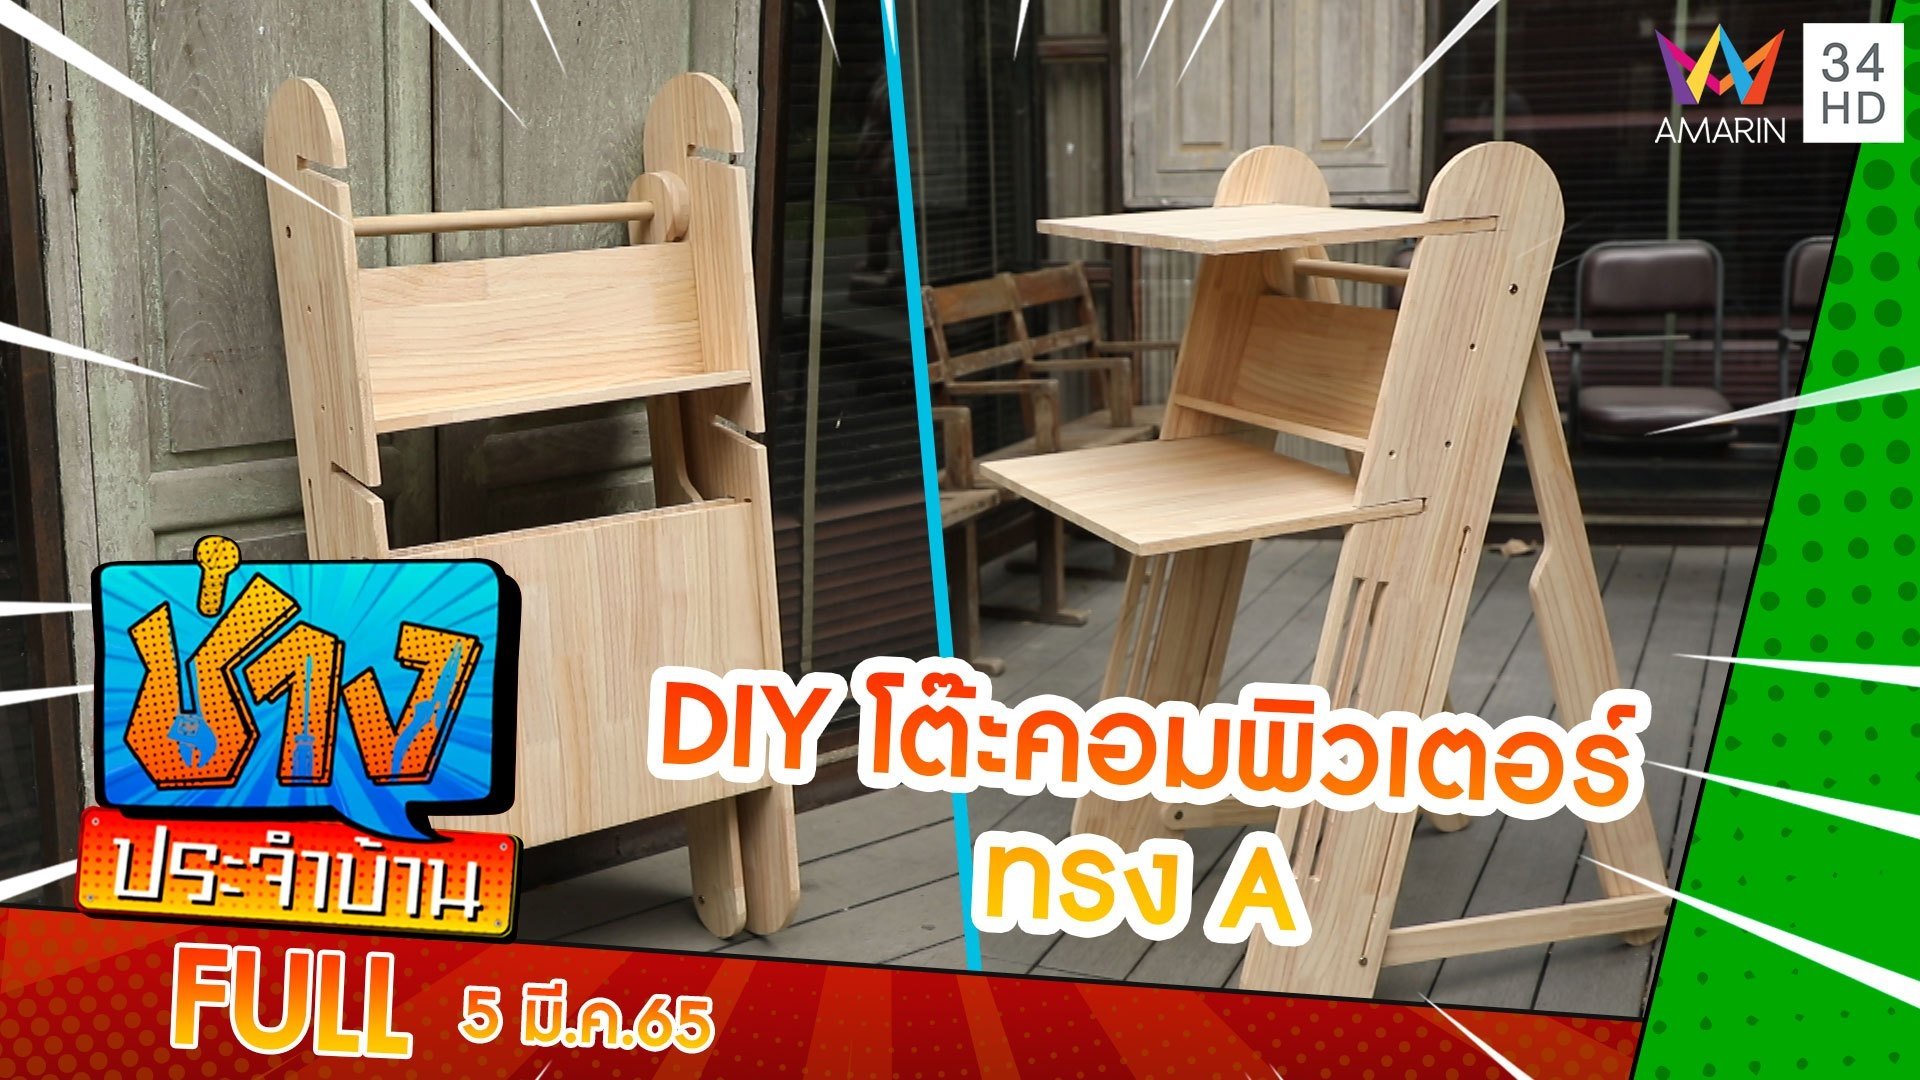 DIY โต๊ะคอมพิวเตอร์ทรง A ประหยัดพื้นที่ | ช่างประจำบ้าน | 5 มี.ค. 65 | AMARIN TVHD34